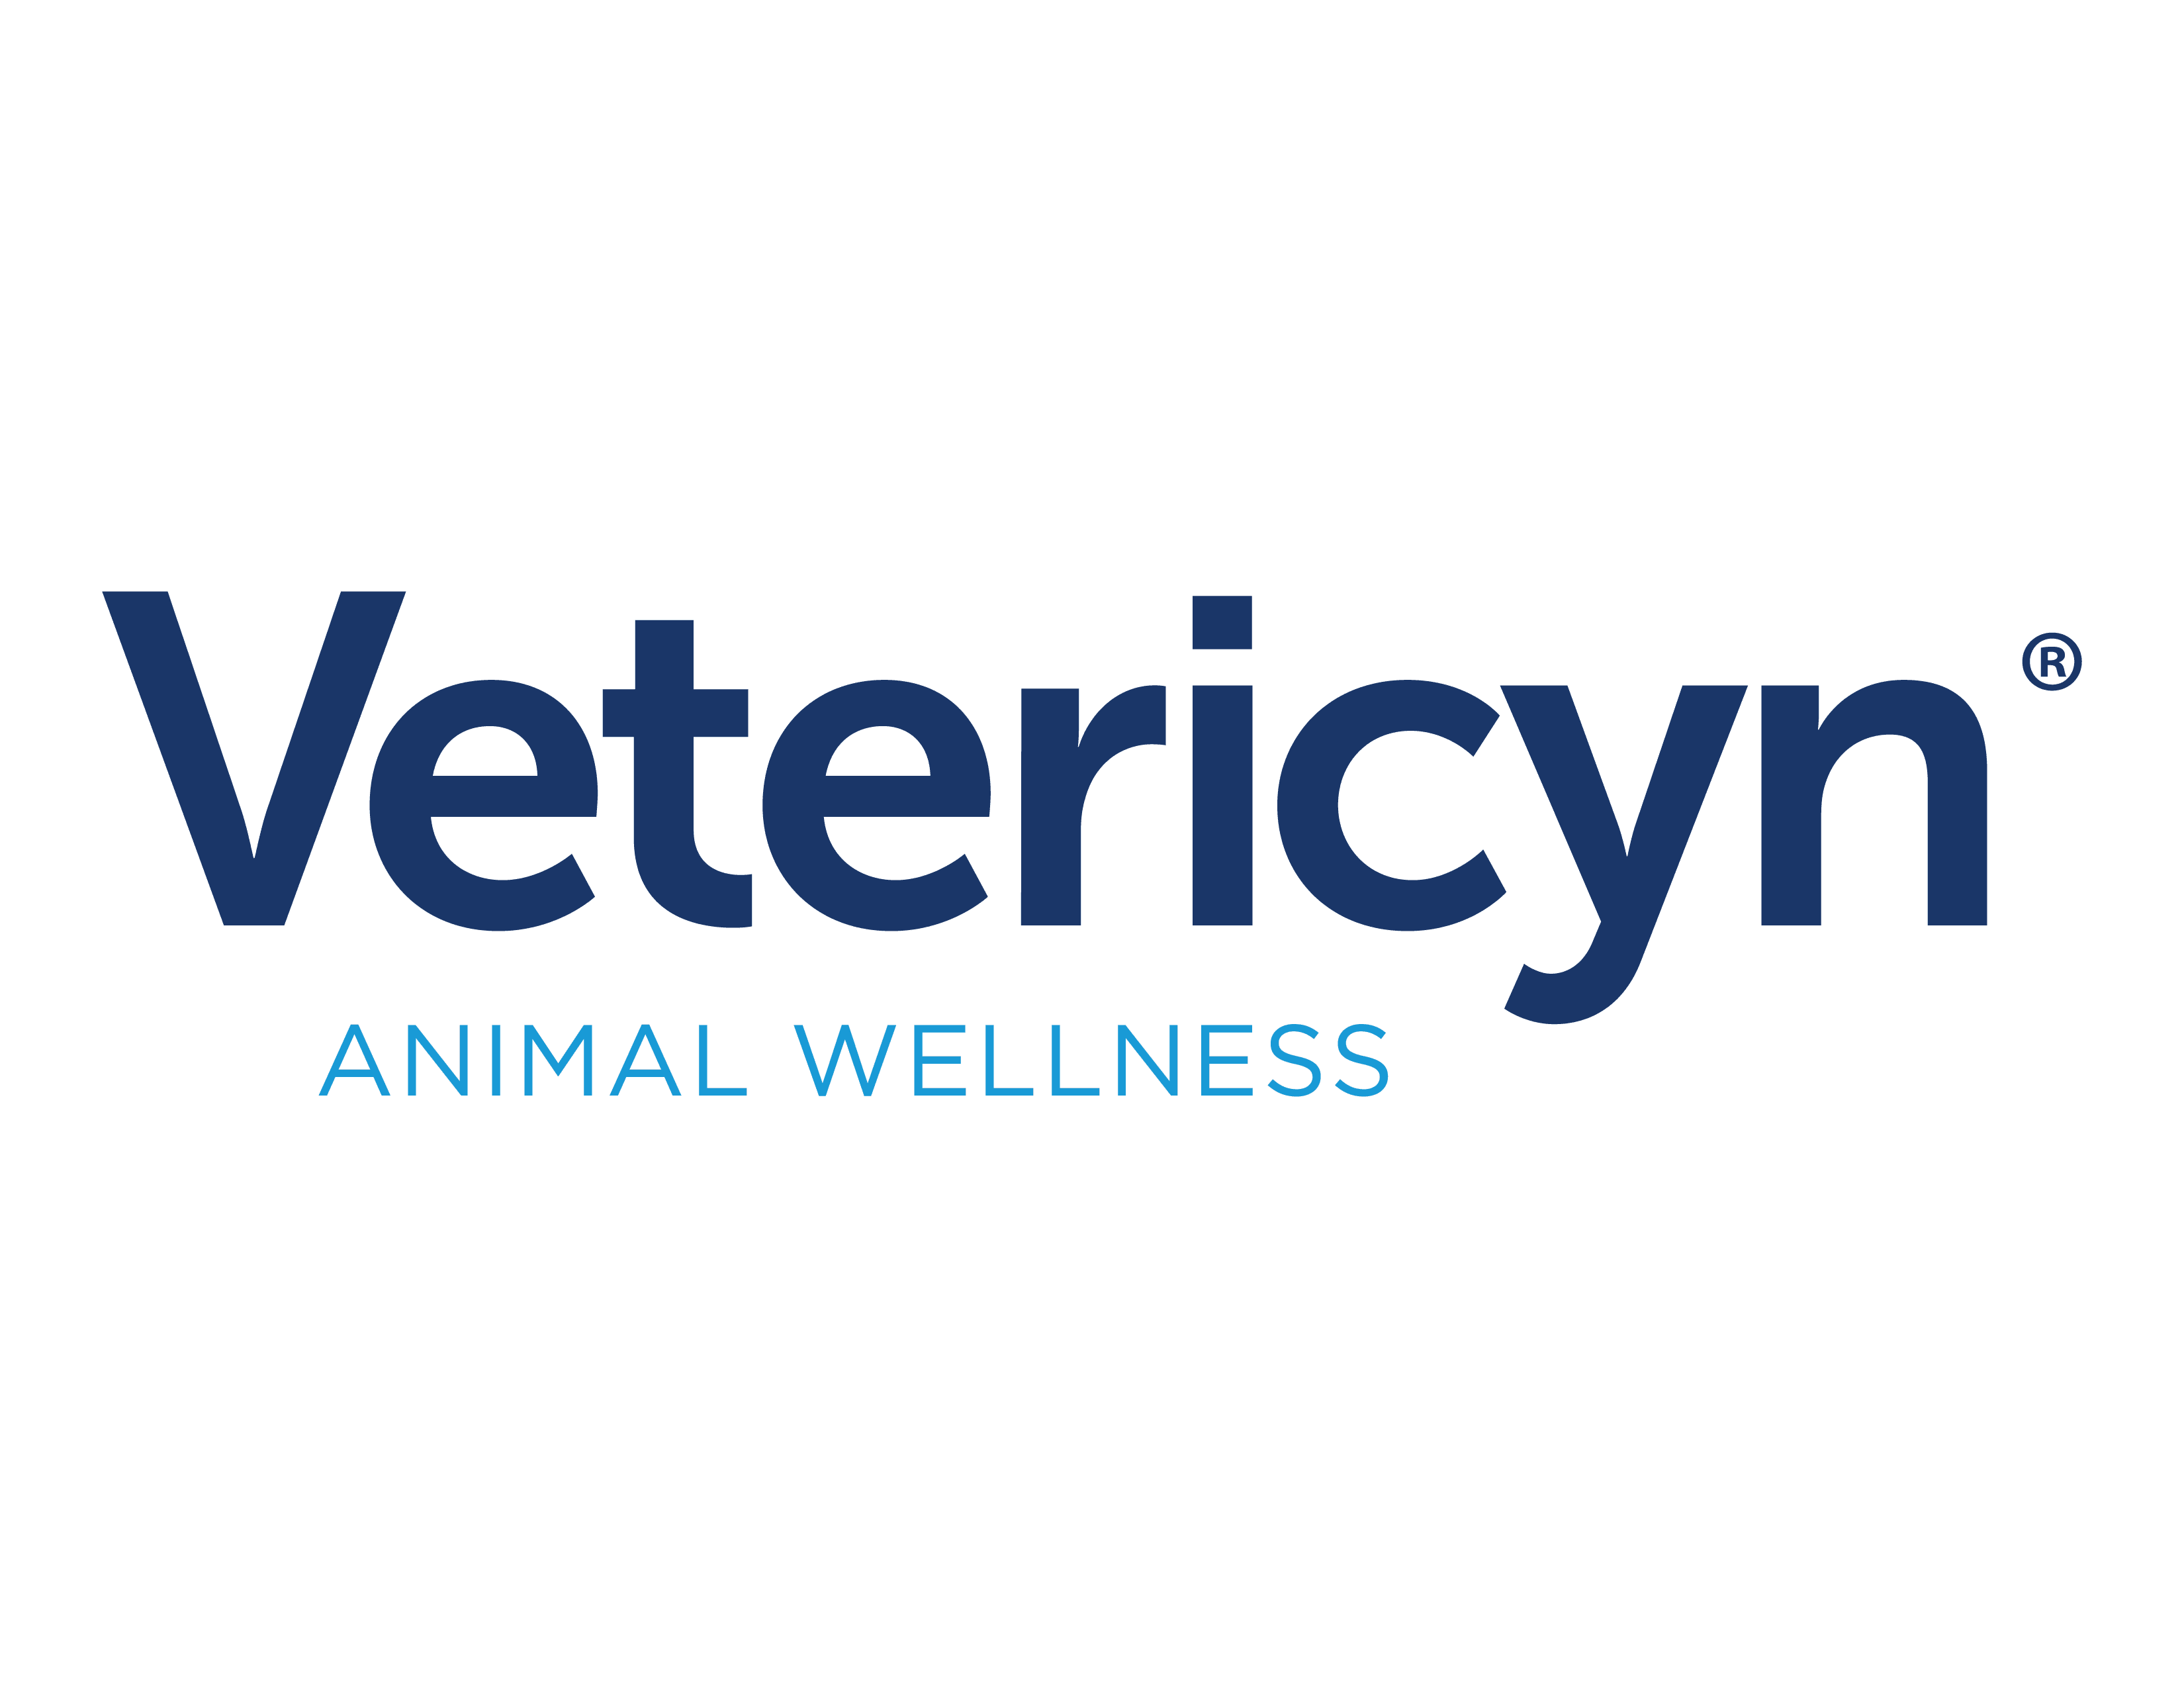 Vetericyn Plus® Antimicrobial Eye Wash - Fort Worth, TX - Handley's Feed  Store